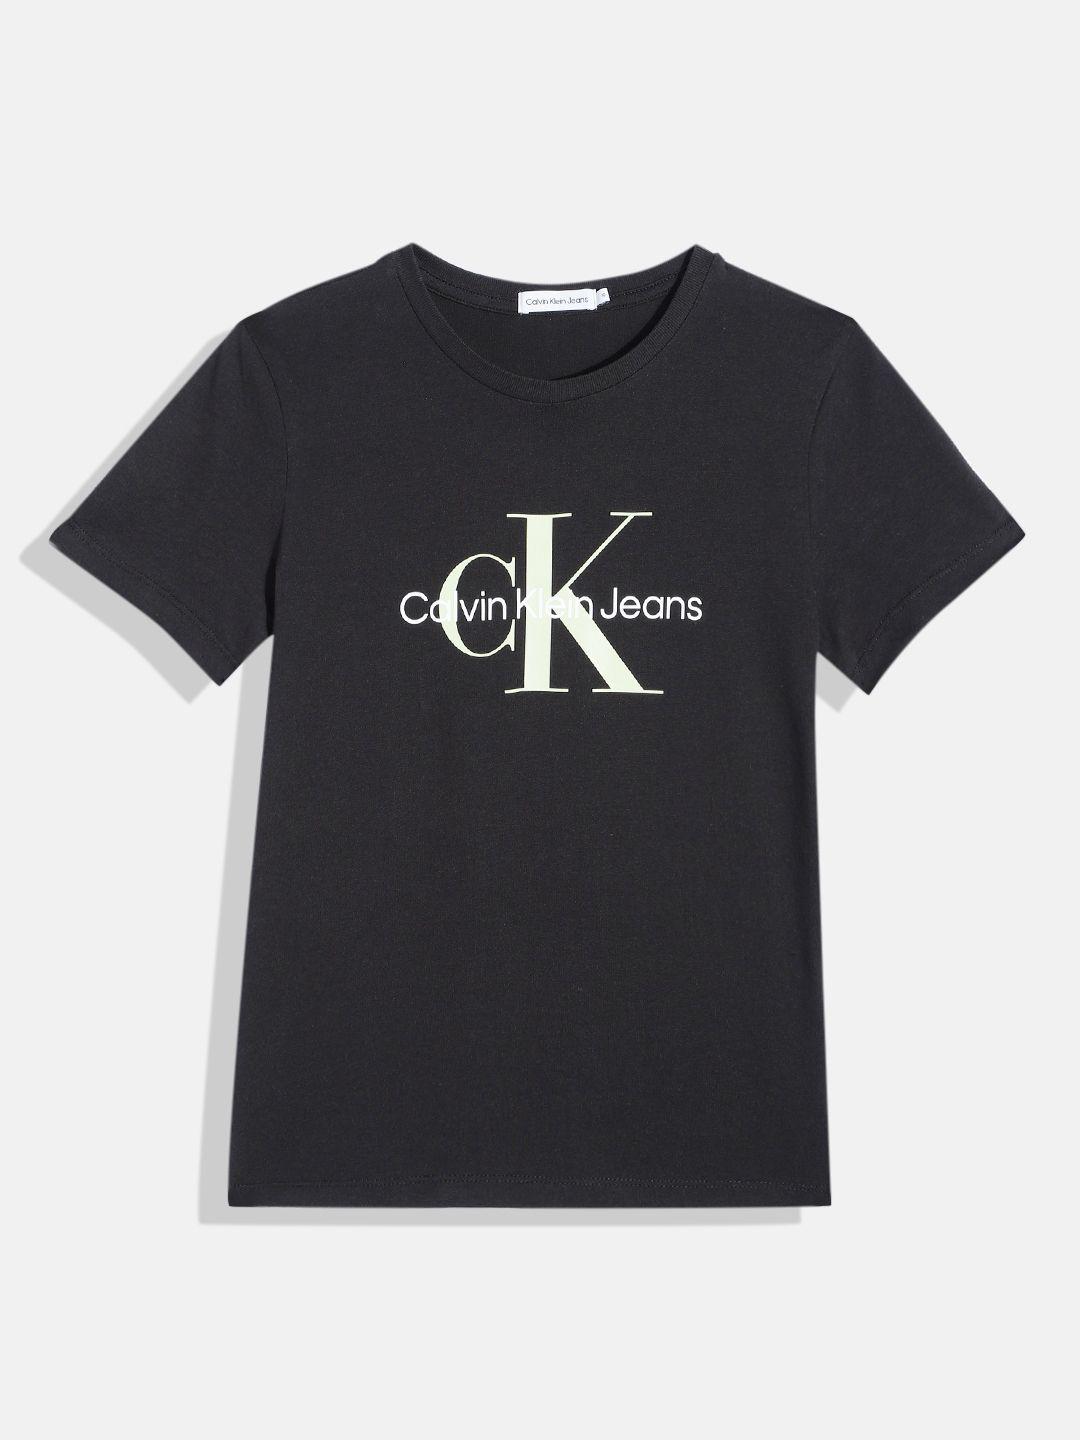 calvin klein unisex kids brand logo print knitted organic cotton t-shirt